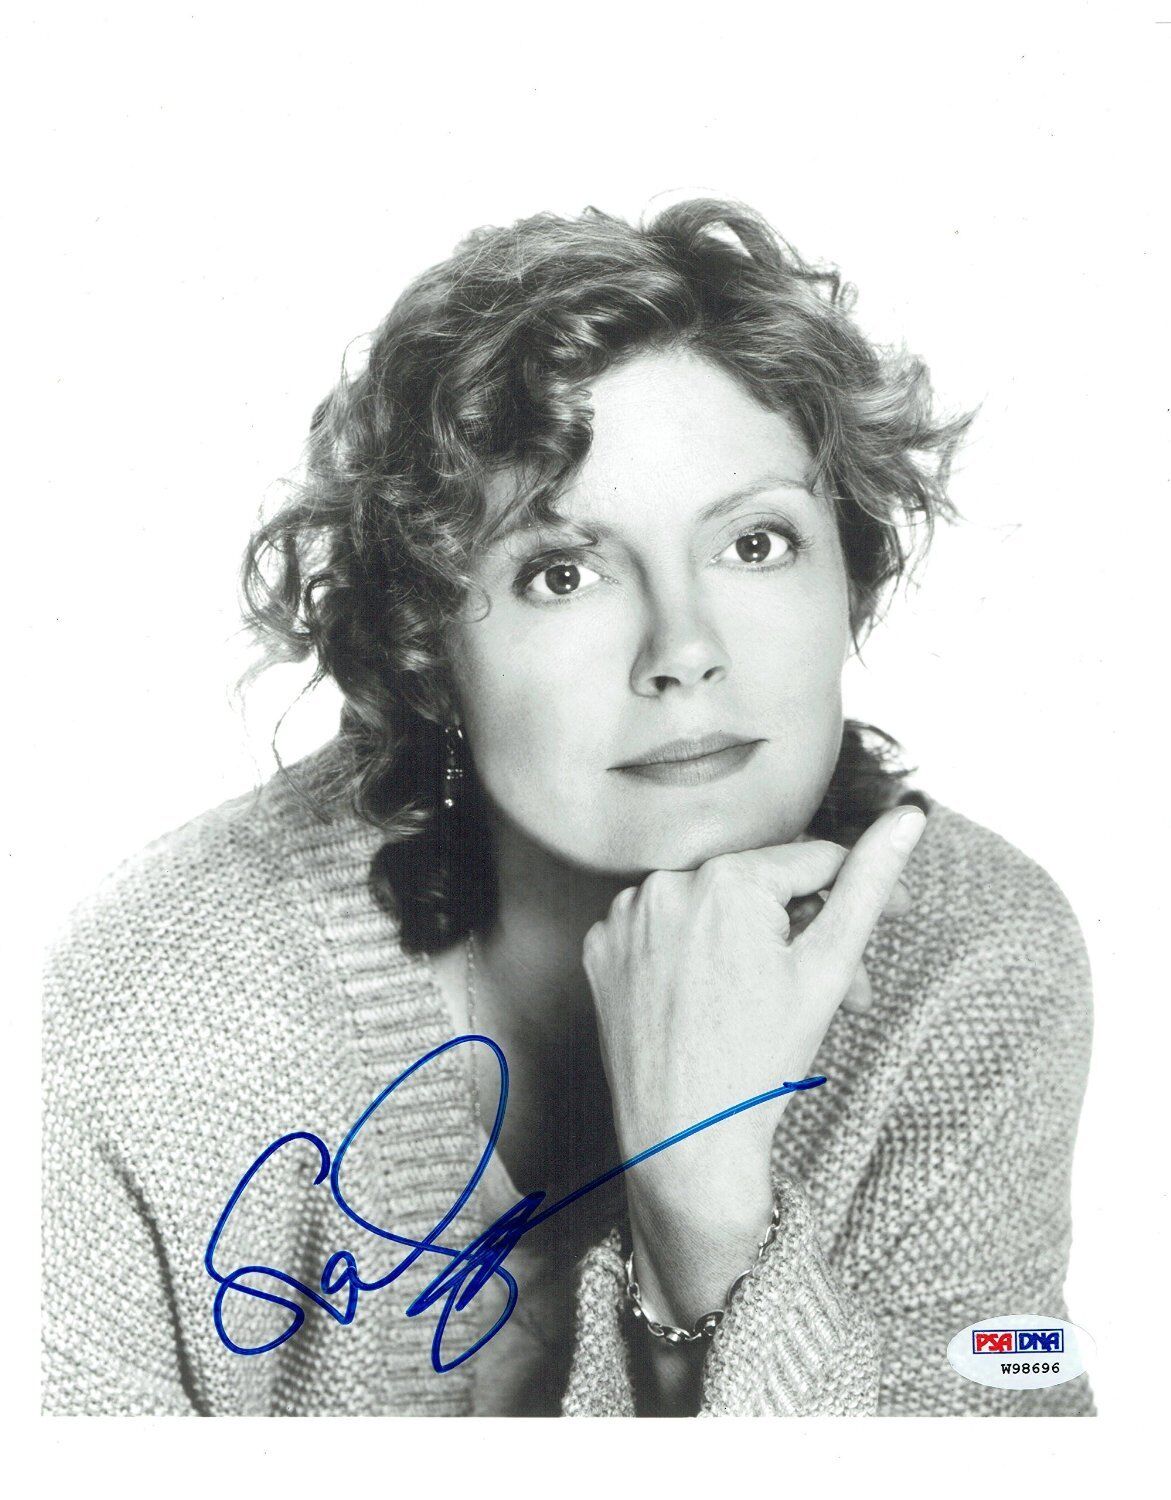 Susan Sarandon Signed Authentic Autographed 8x10 Photo Poster painting PSA/DNA #W98696